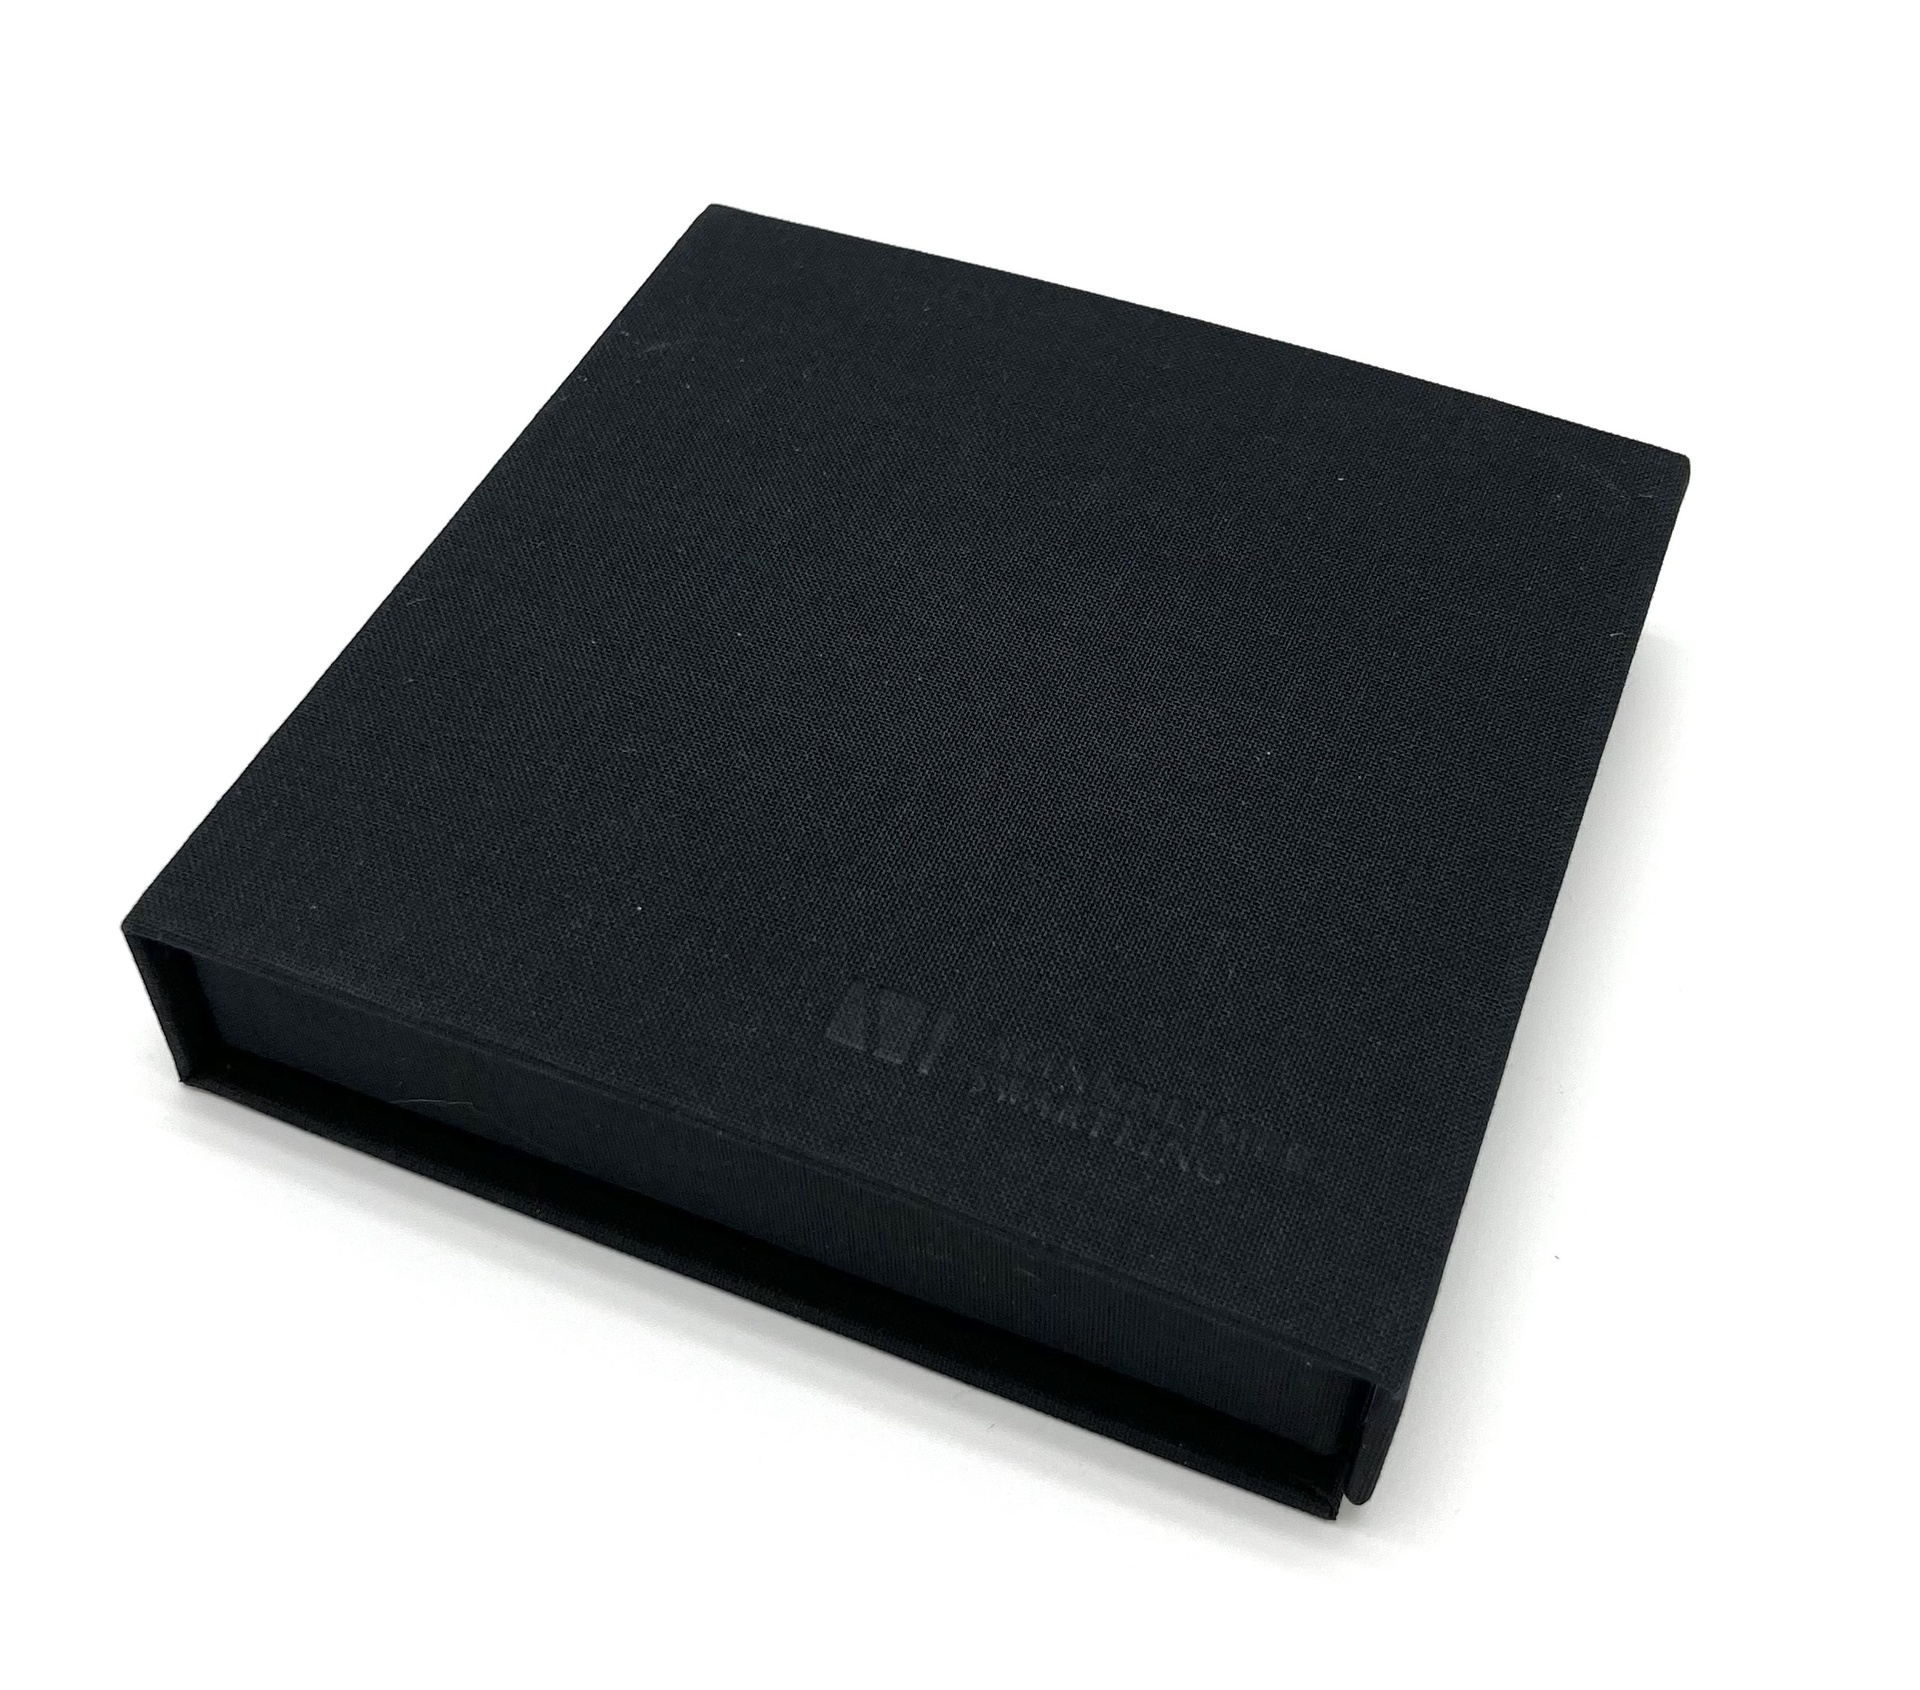 [EEMAN2063] USB box svart präglad logo + ficka rygg 50st/krt